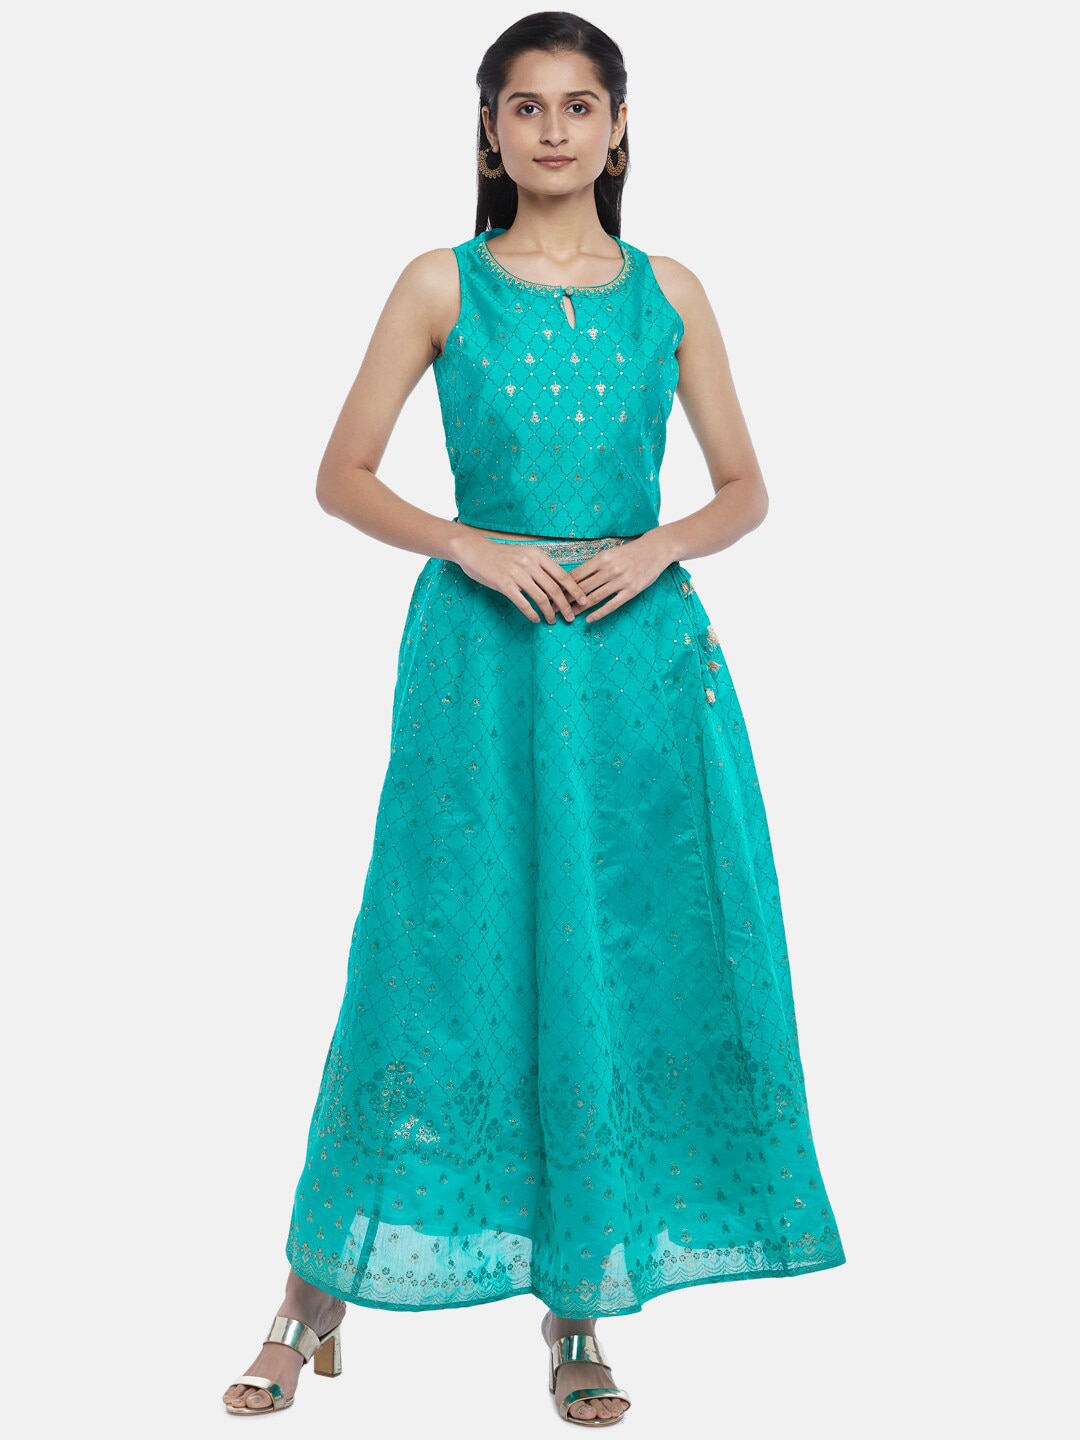 AKKRITI BY PANTALOONS Blue Printed Ready to Wear Lehenga & Blouse Price in India